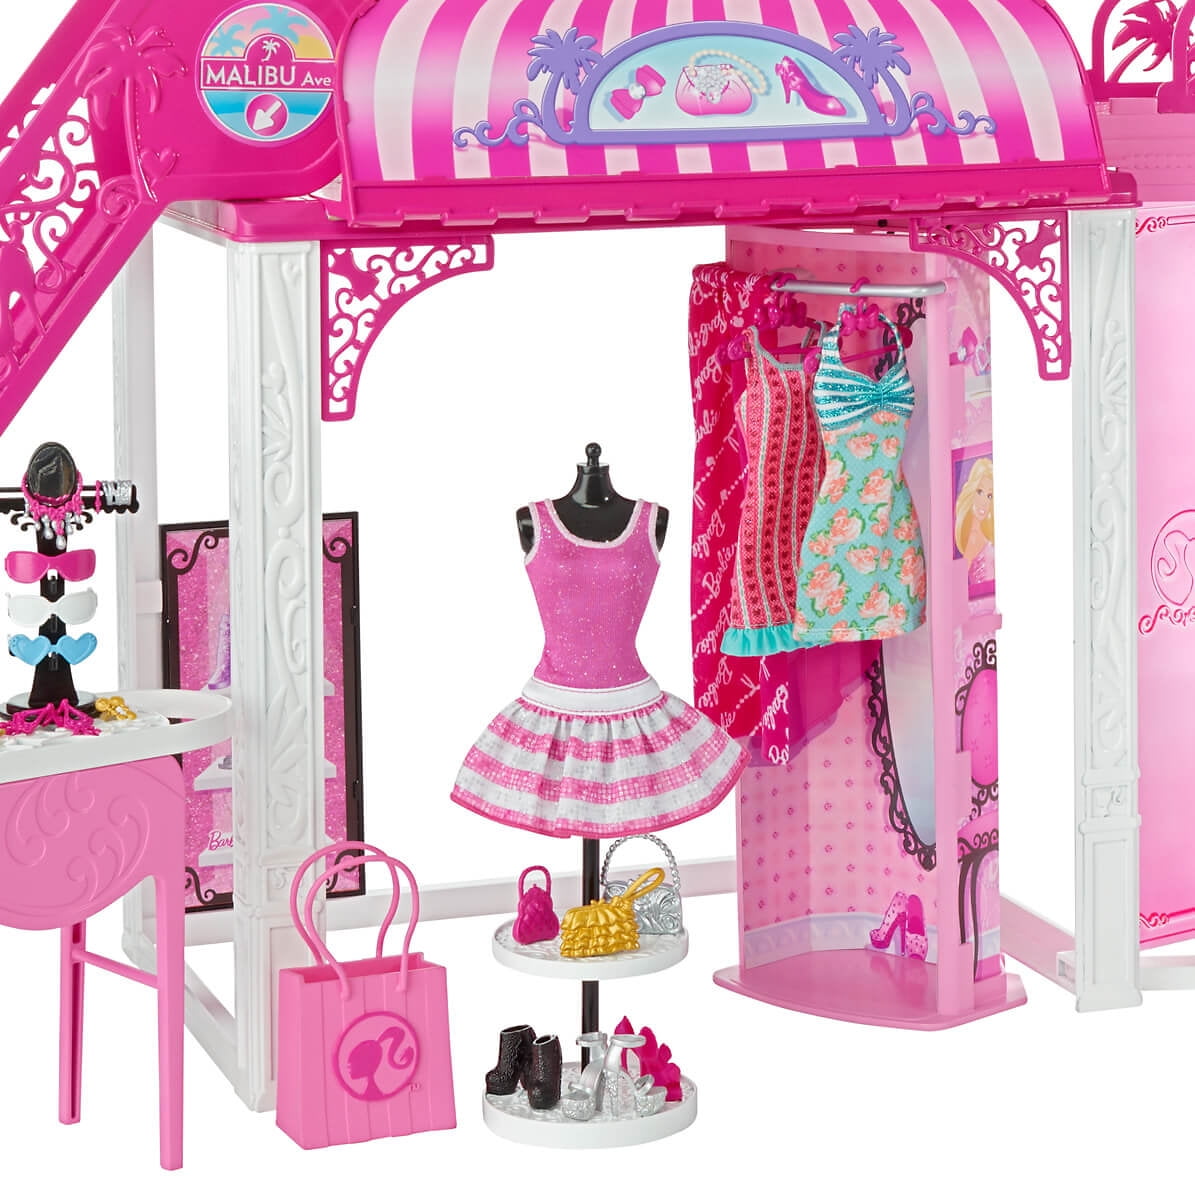 barbie doll mall set